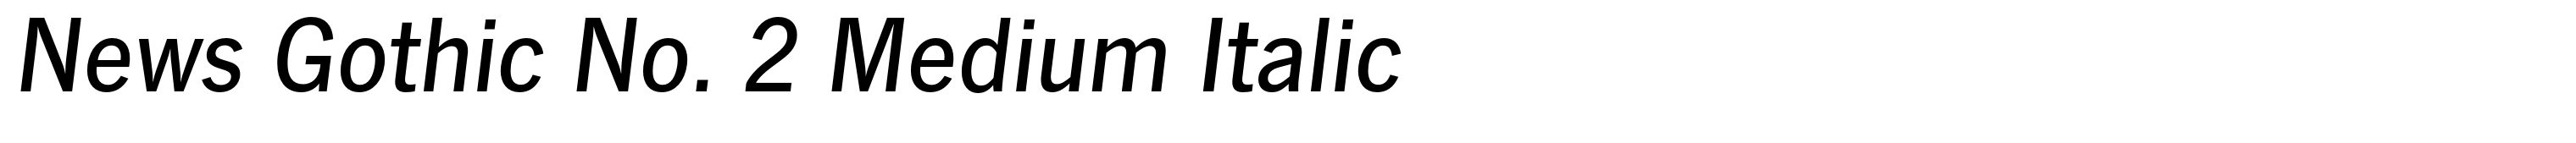 News Gothic No. 2 Medium Italic